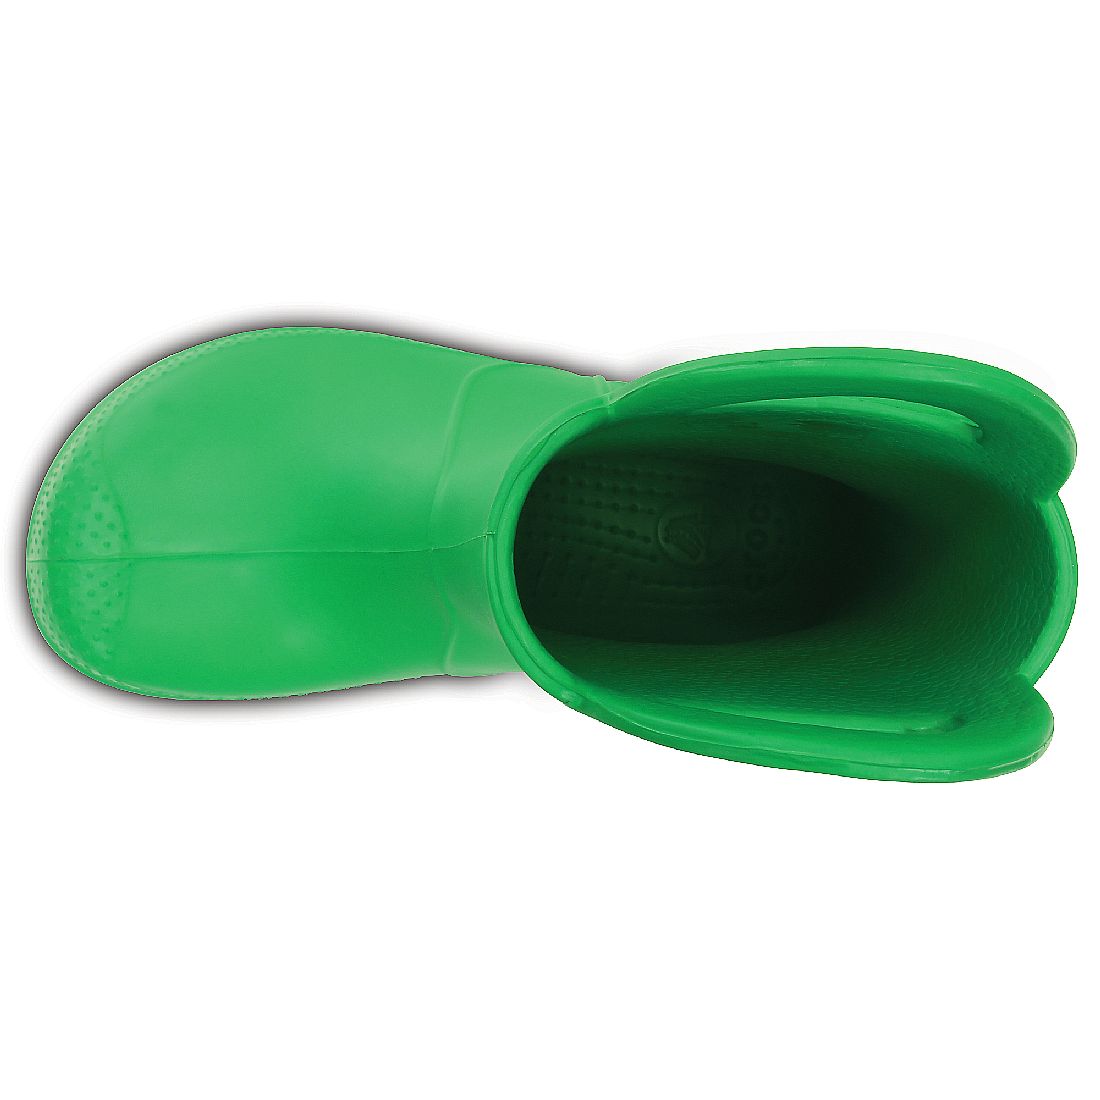 Crocs Handle It Rain Boot Kids Gummistiefel Regenstiefel Kinder 12803 grün